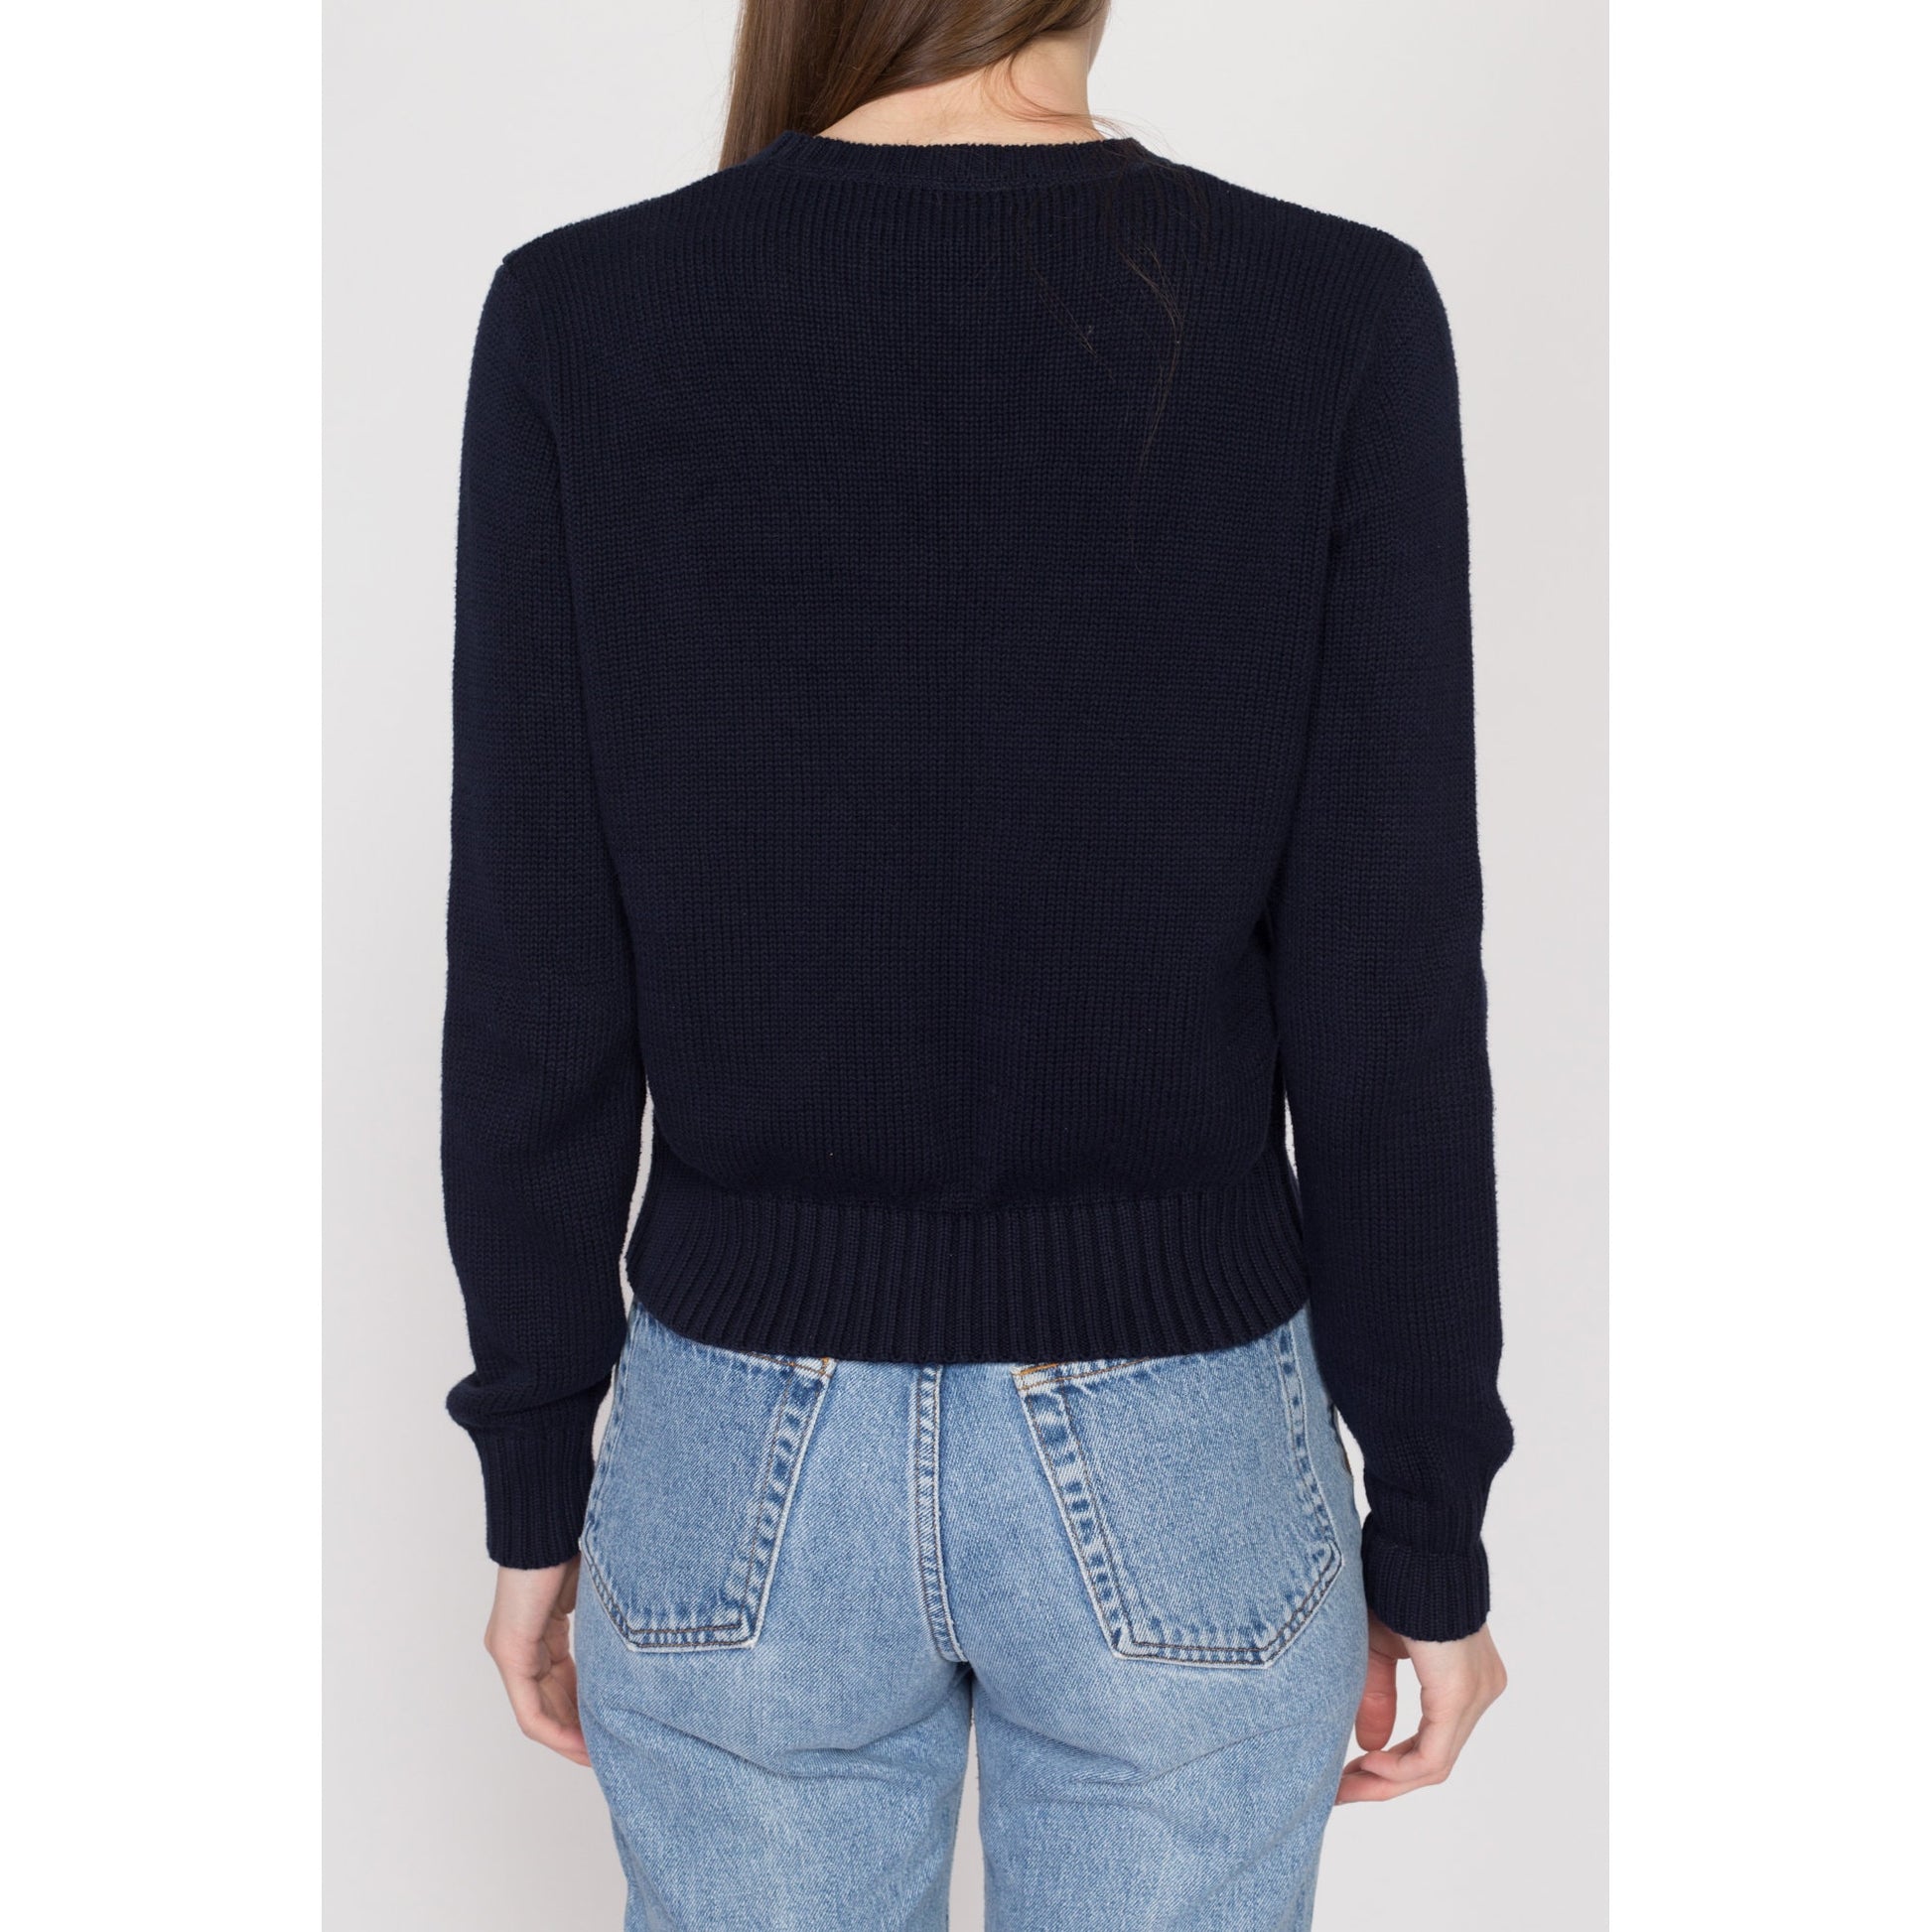 Sm-Med 90s Polo Sport Navy Blue Cotton Knit Sweater | Vintage Ralph Lauren Plain Minimalist Pullover